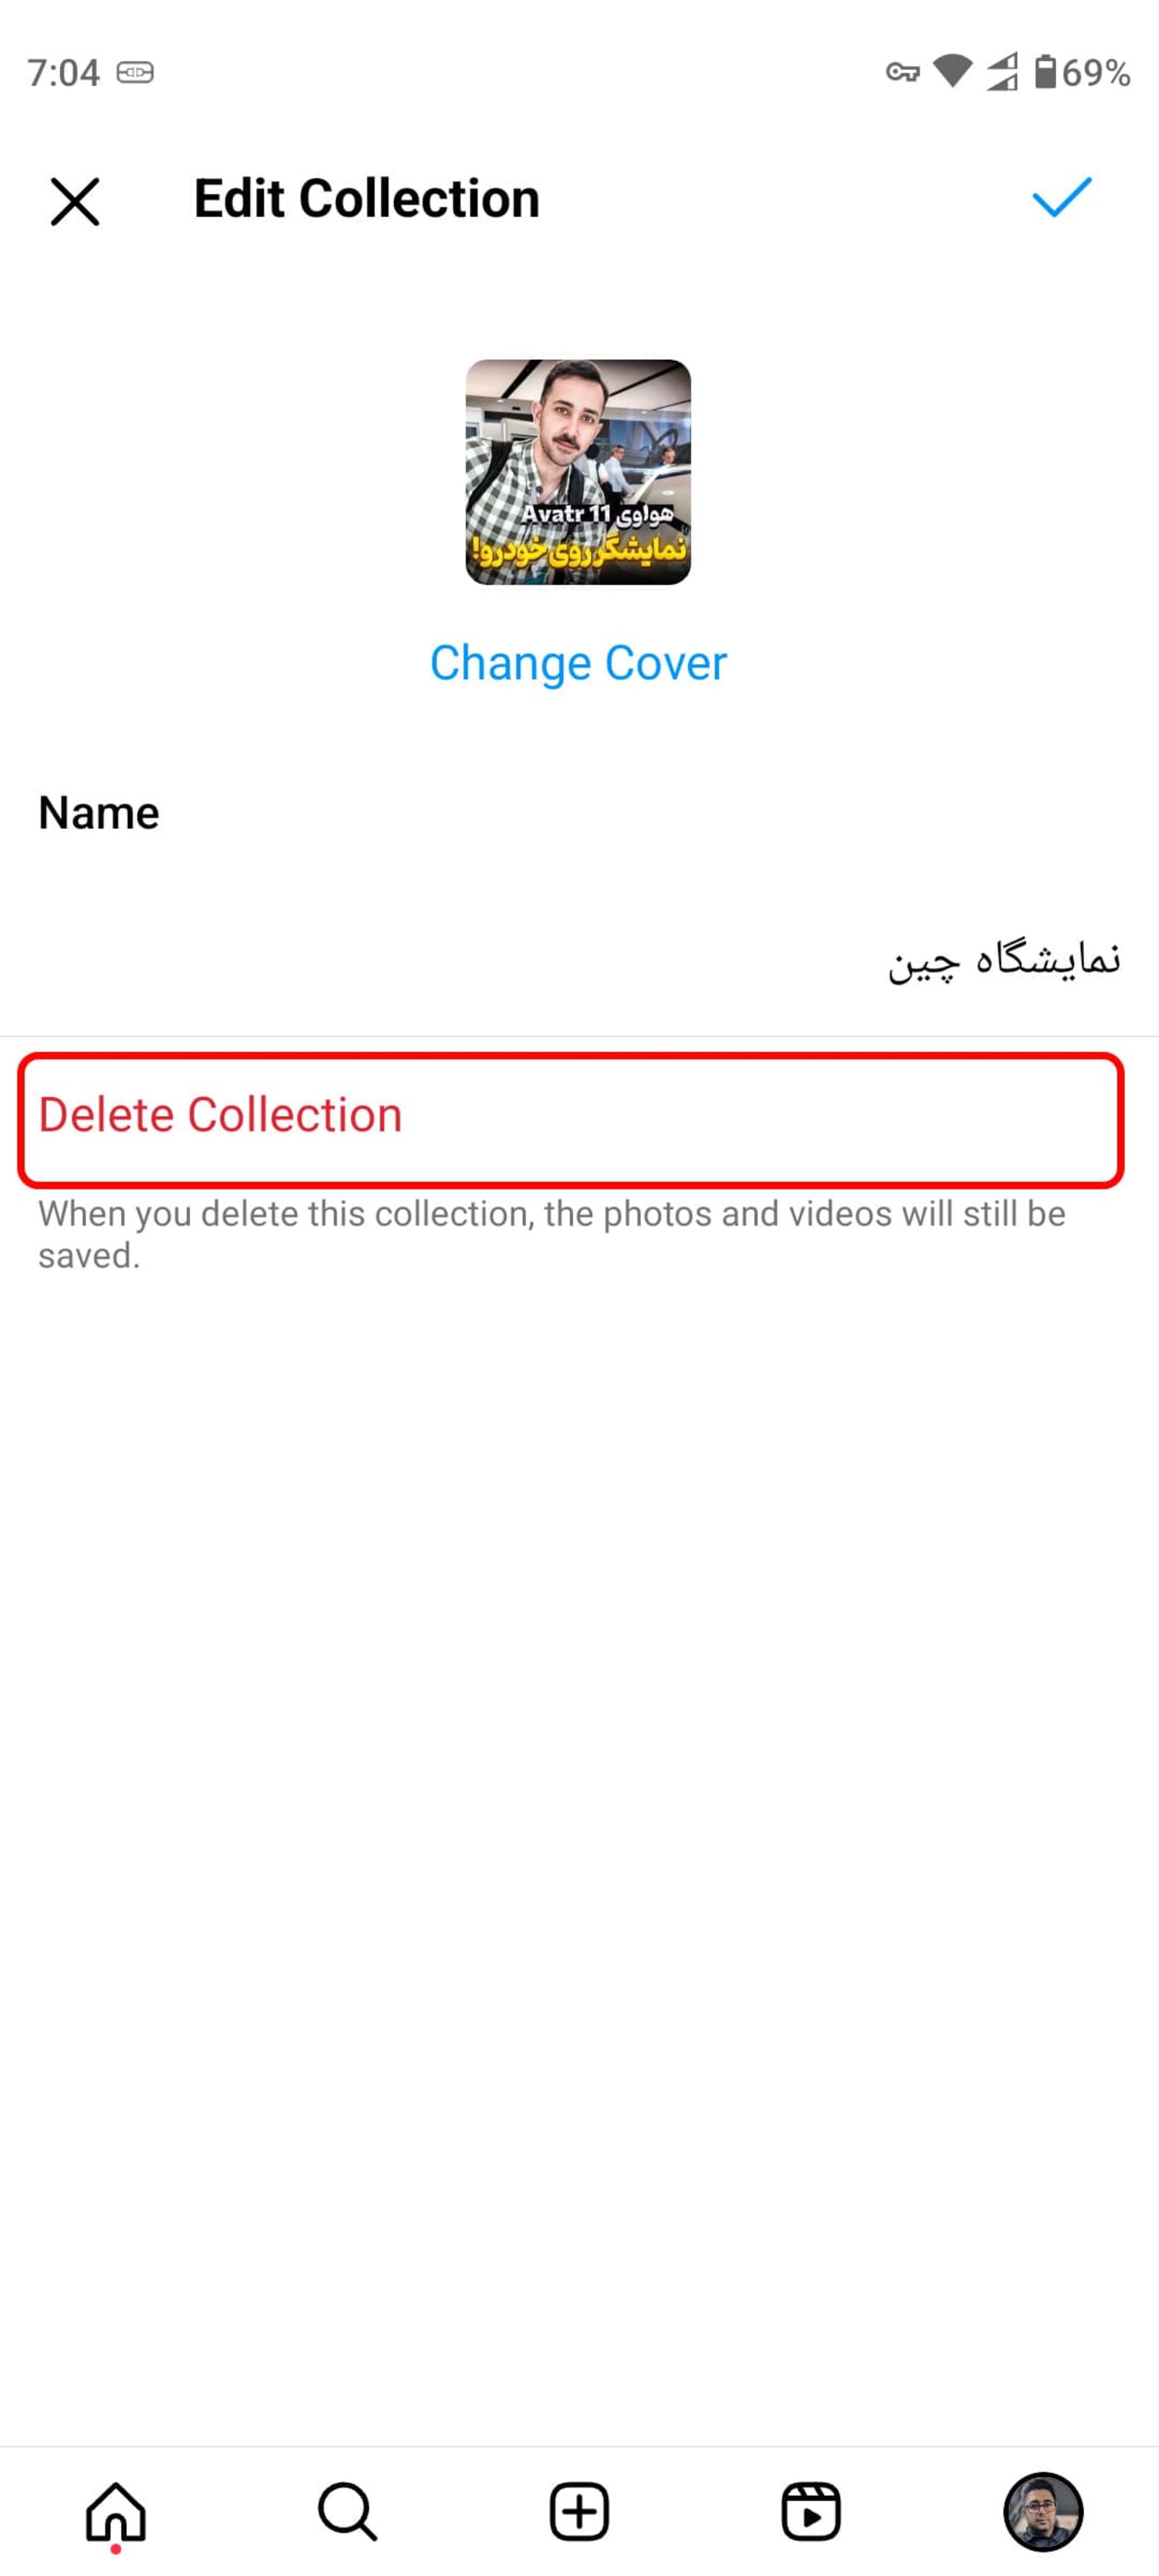 انتخاب  Delete Collection برای حذف Collaborative Collection